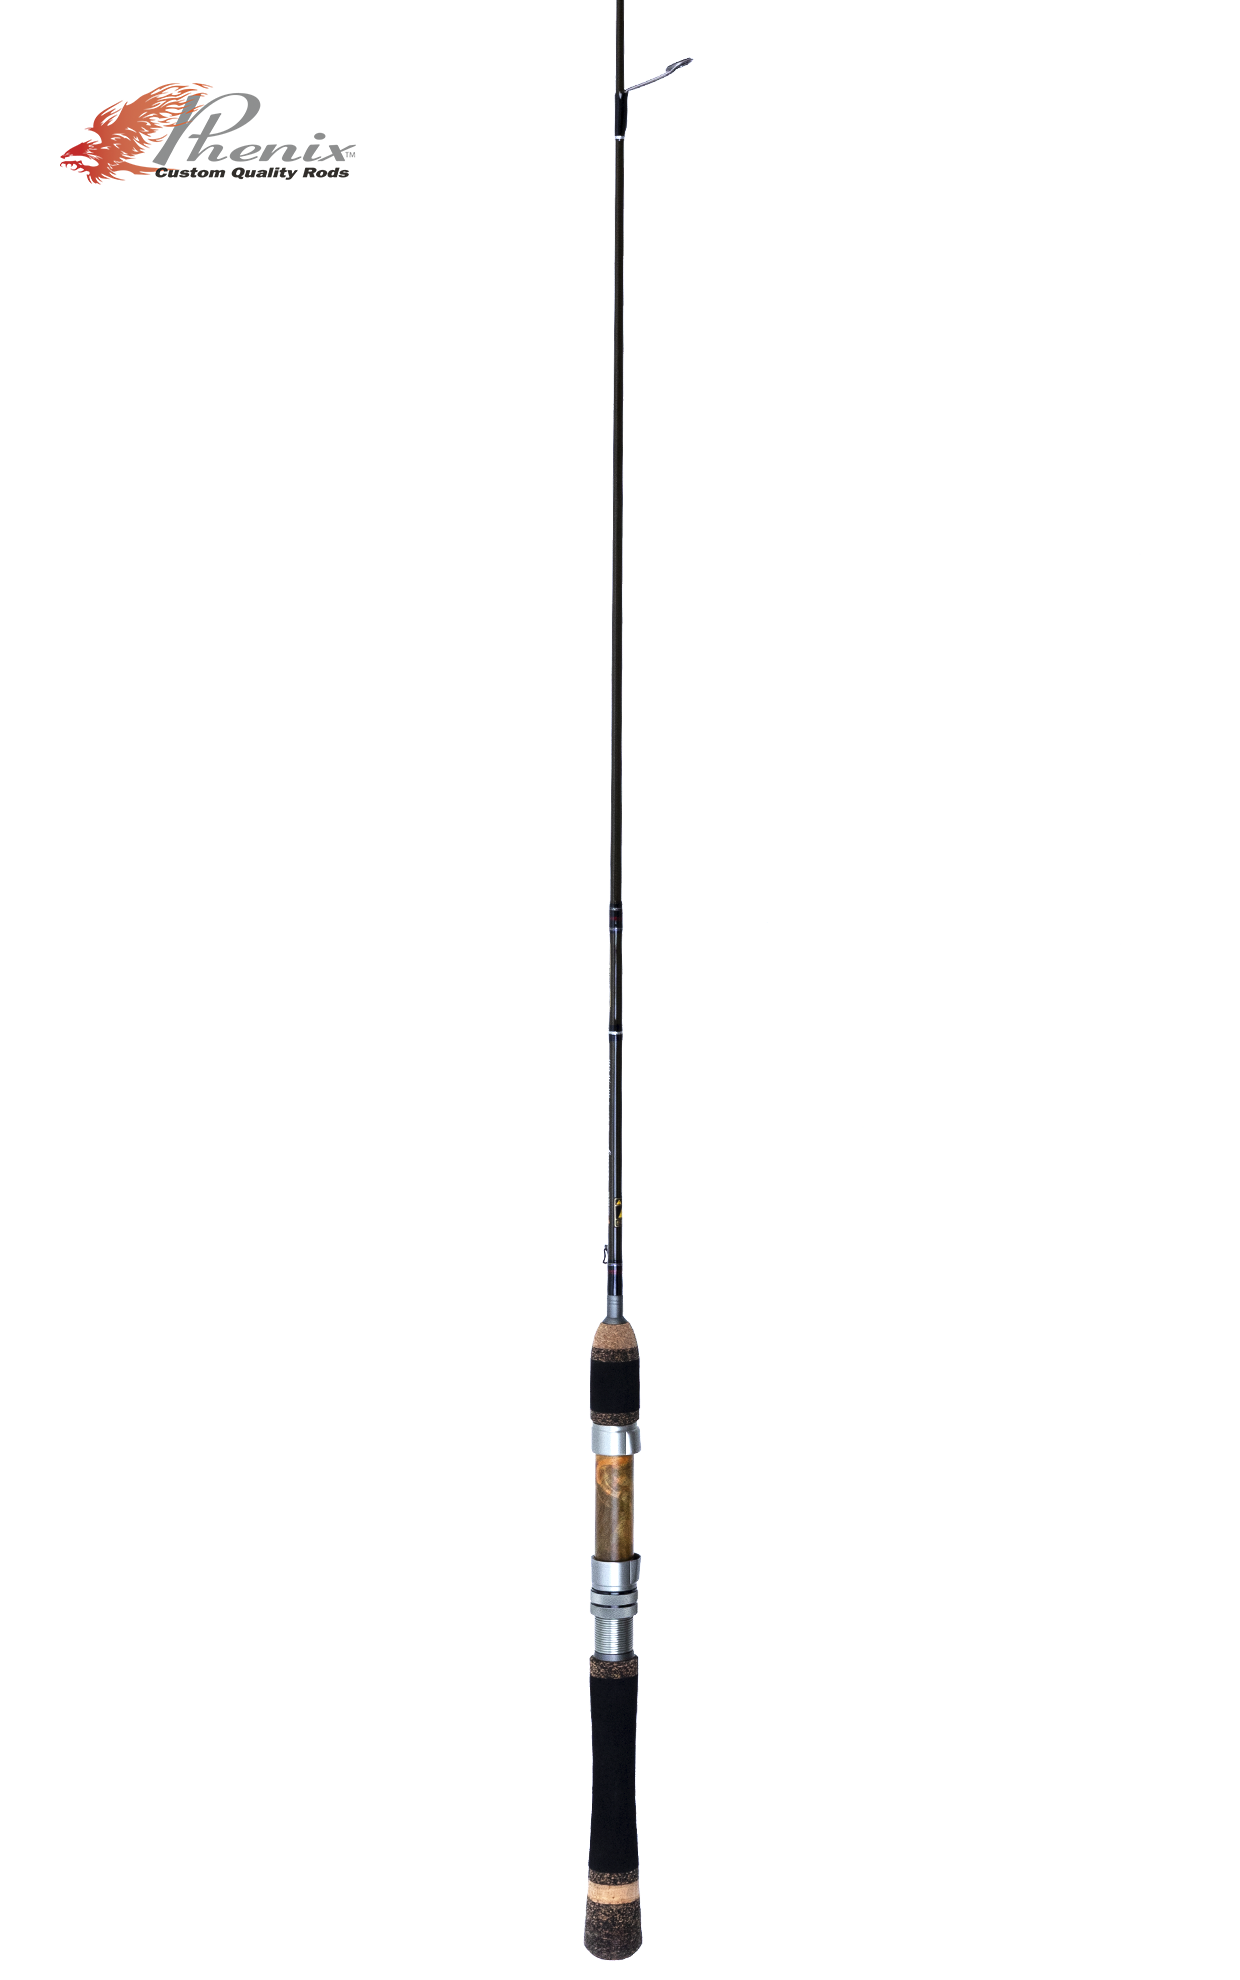 Phenix Mirage Fishing Rod (Model: MF801-2 Spinning) - Hero Outdoors